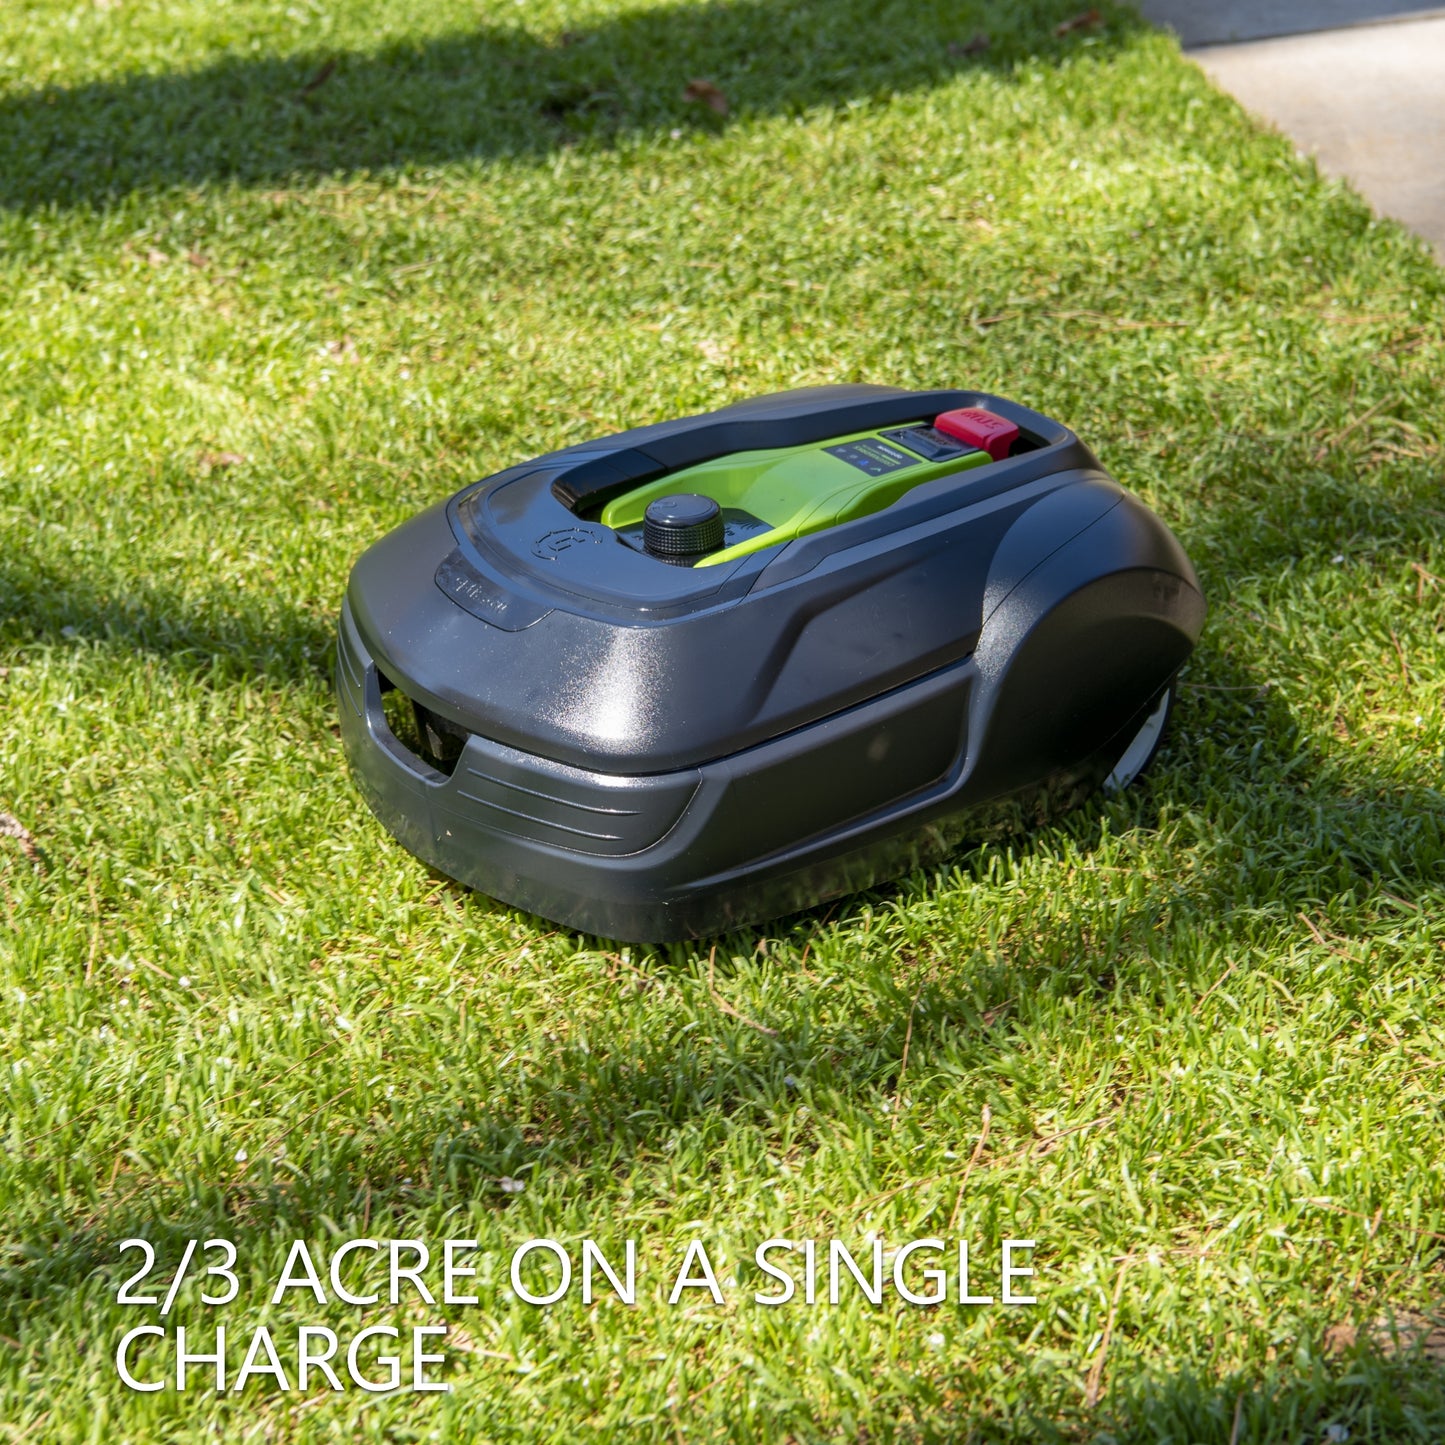 optimow® 66 Robotic Lawn Mower